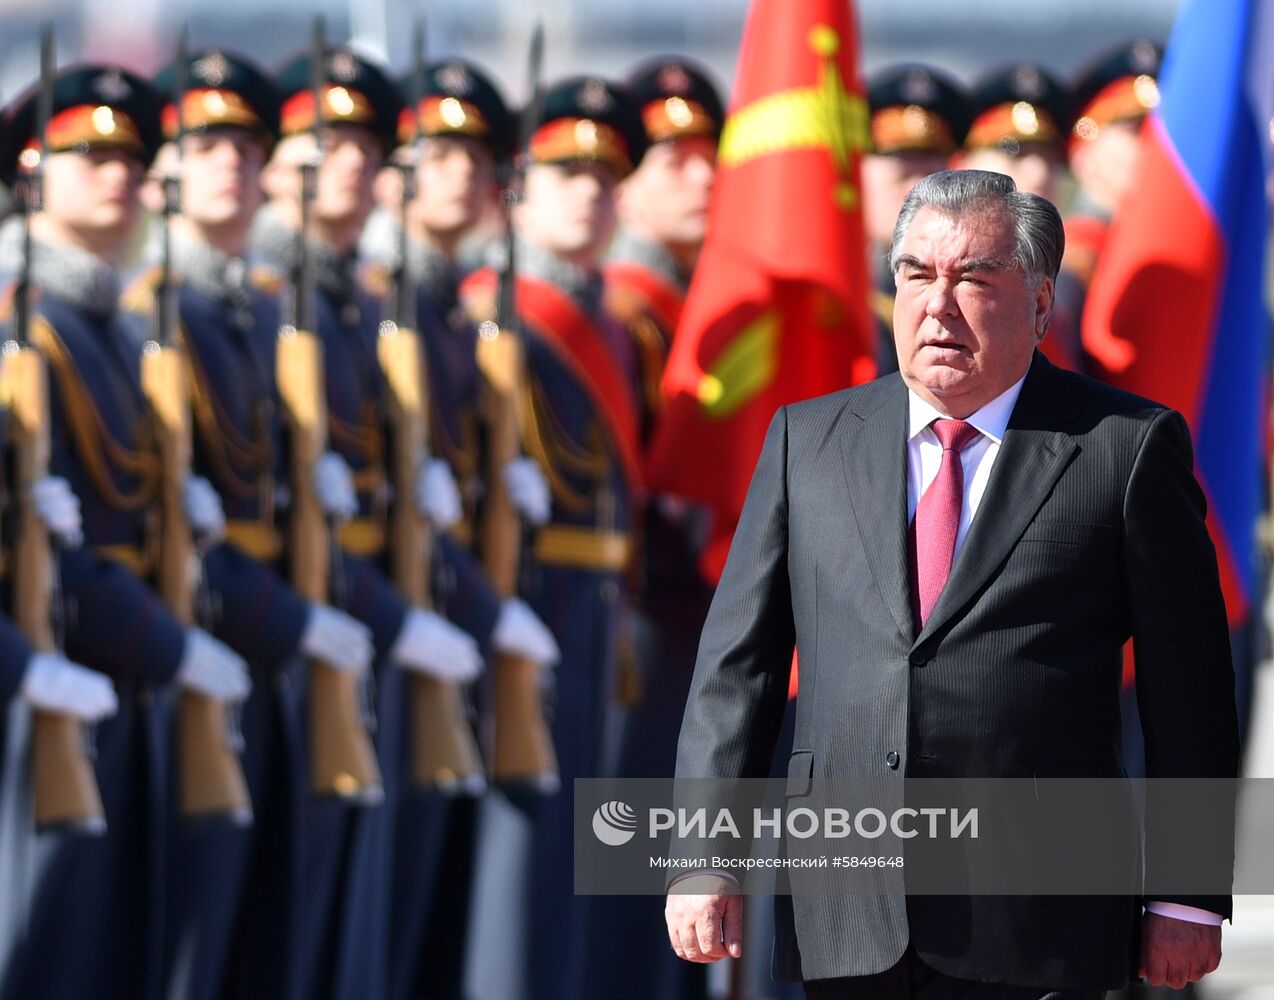 Прилет президента Таджикистана Э. Рахмона в Москву